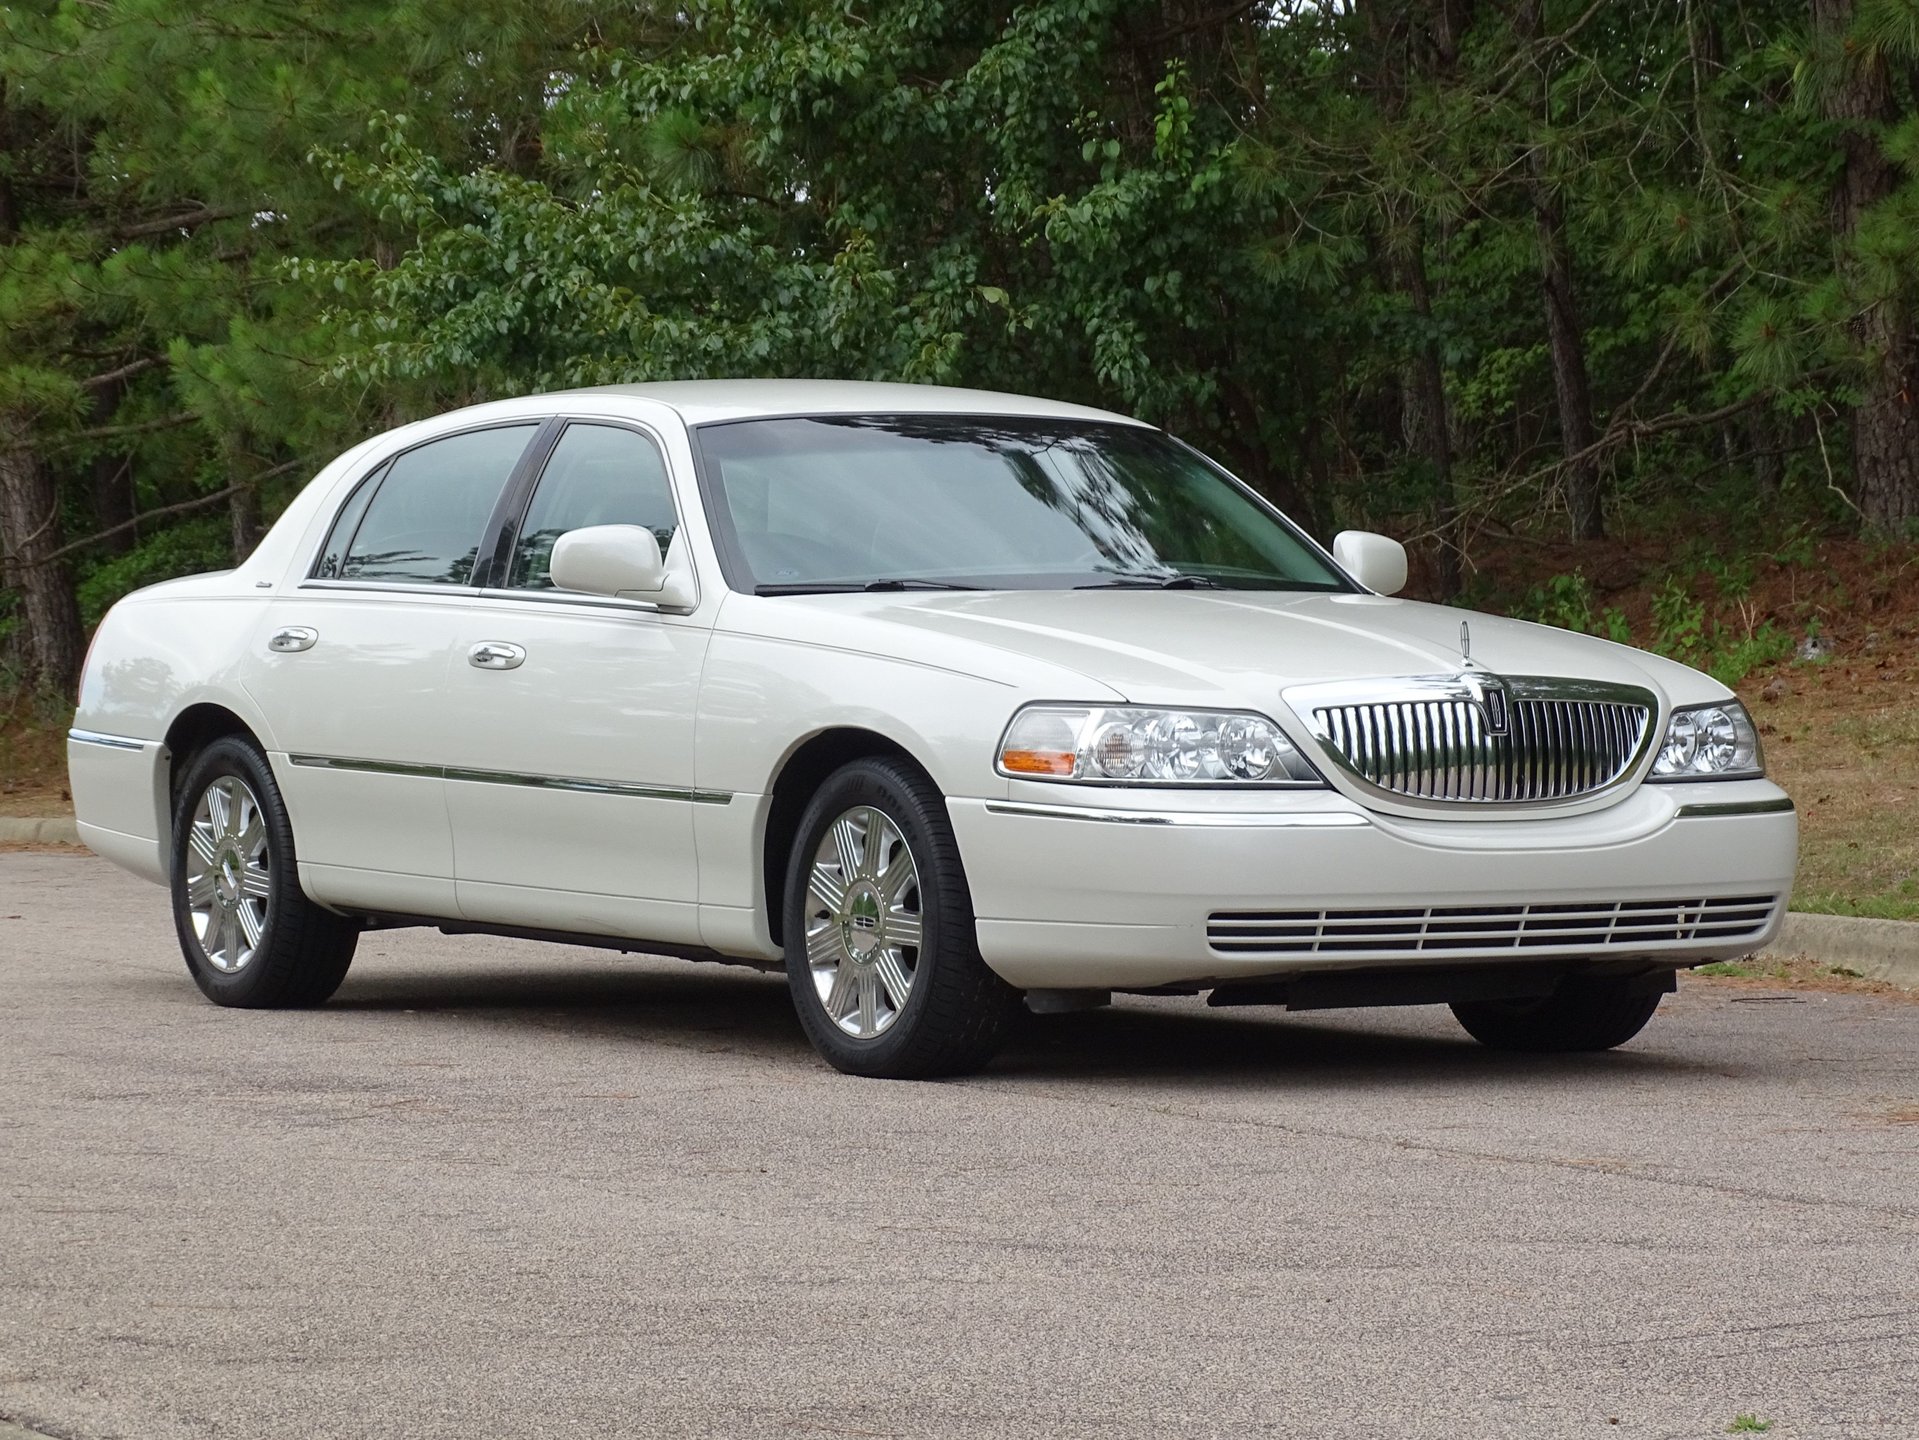 2004 Lincoln Town Car | Raleigh Classic Car Auctions